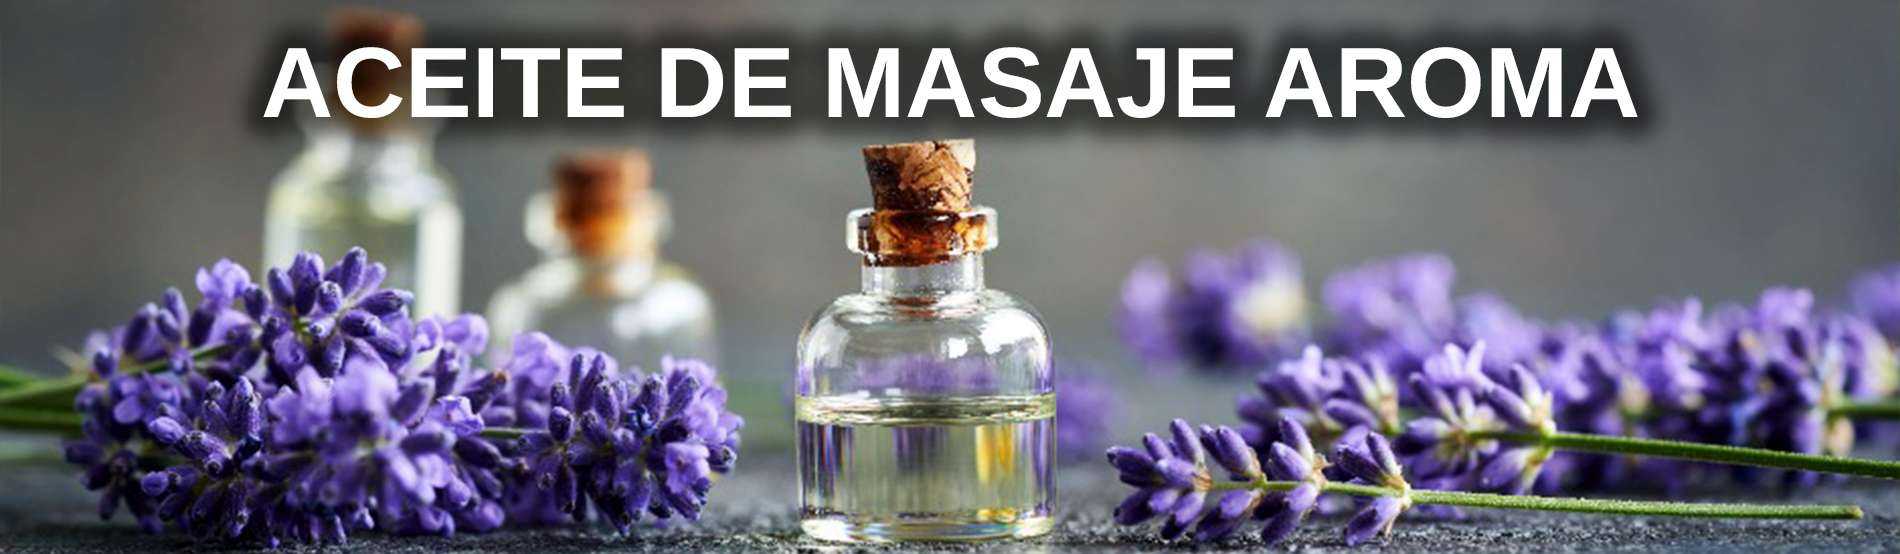 Aceite de masaje aromatico